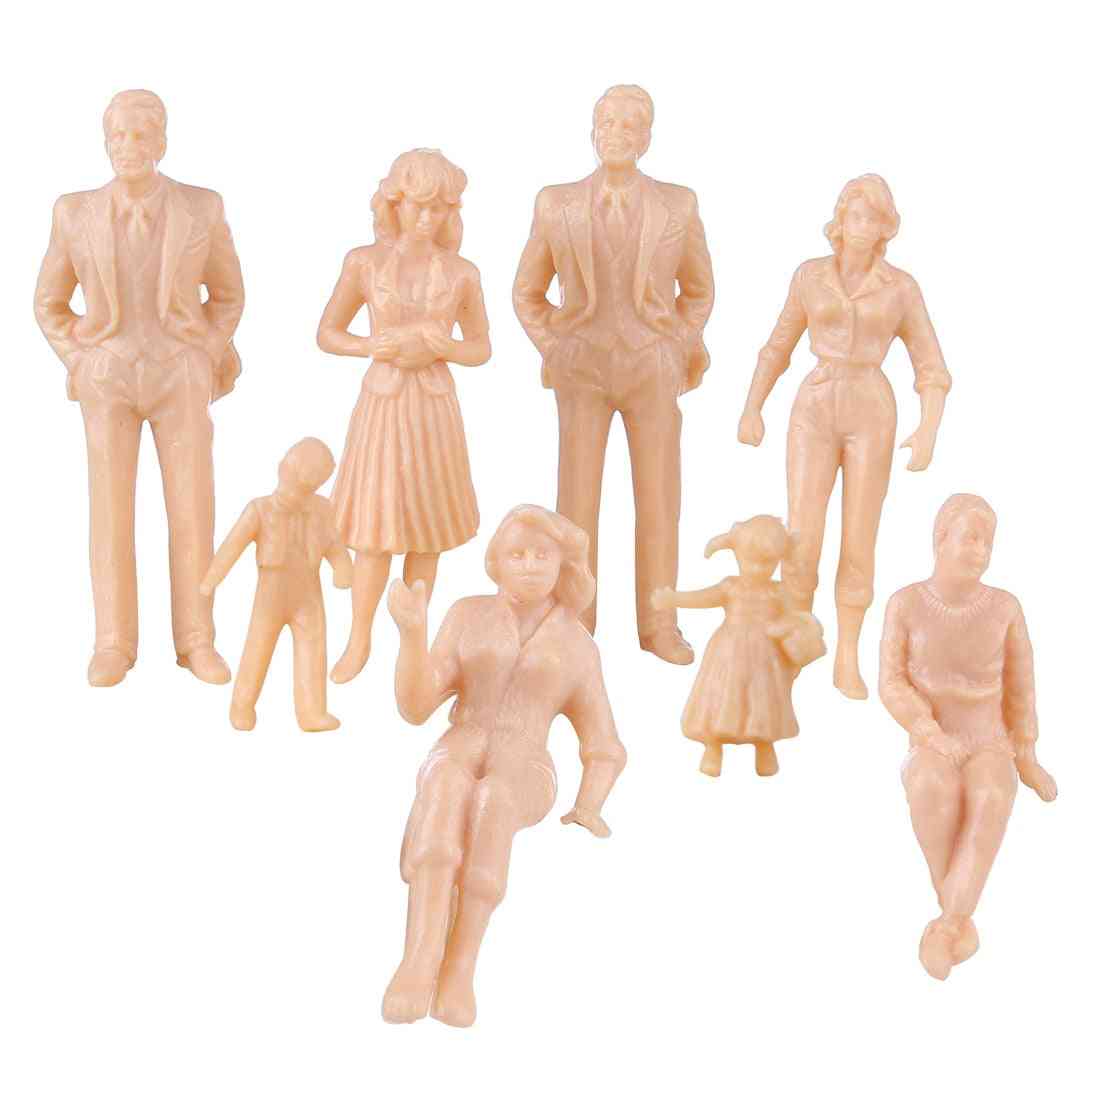 Scale Miniature People Figurines - Diy Painted Abs Figures / Models